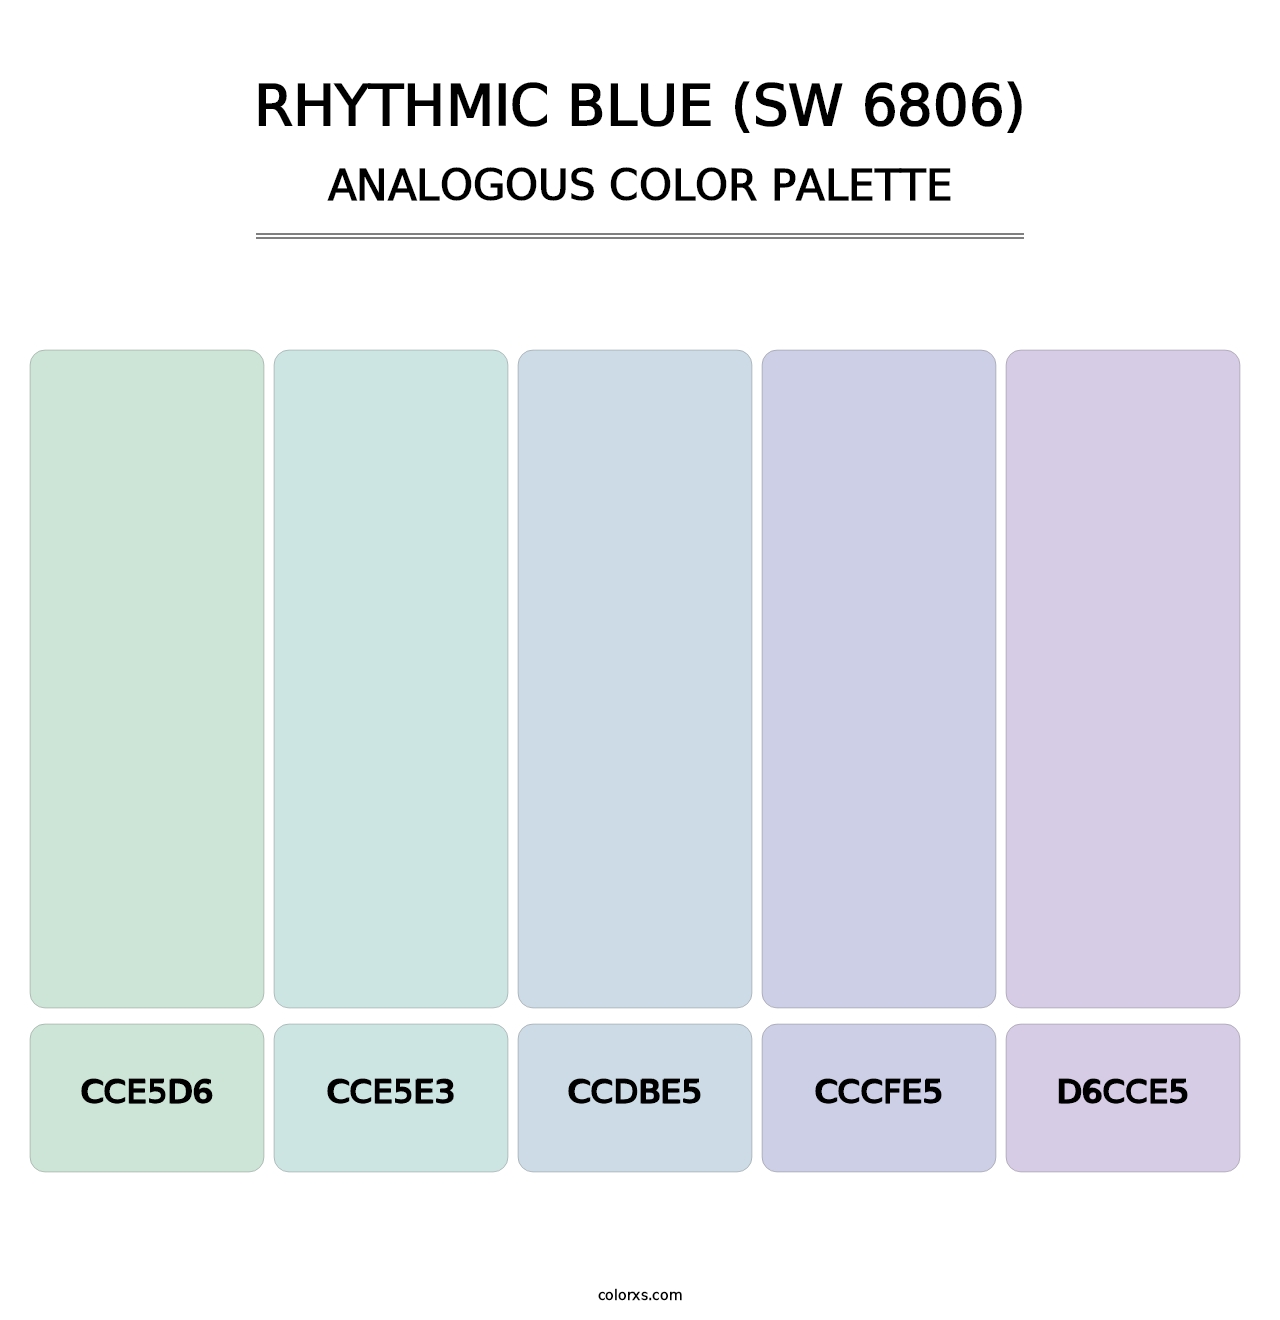 Rhythmic Blue (SW 6806) - Analogous Color Palette